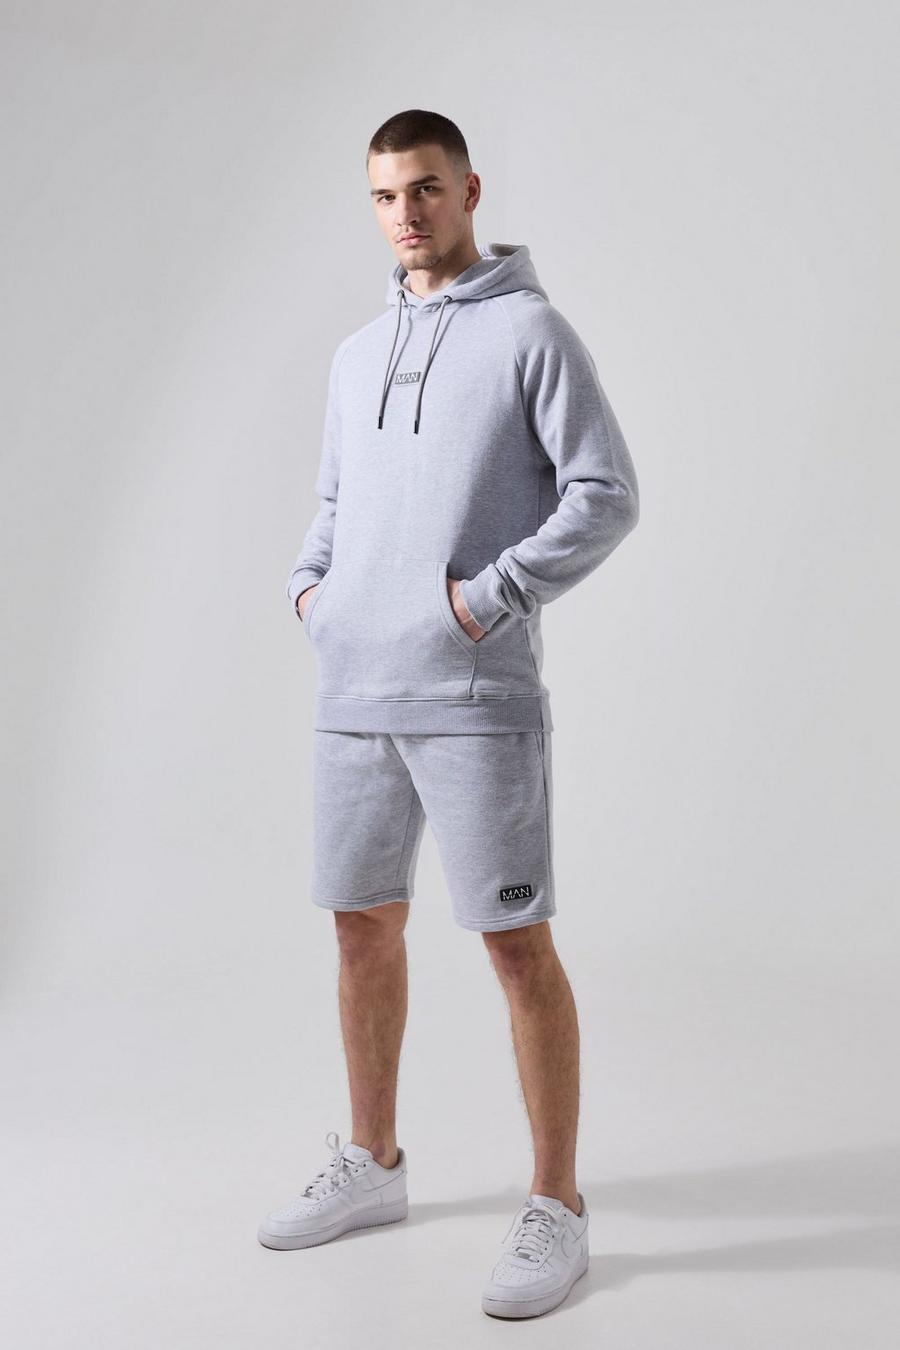 Tall Man Active Trainingshoodie und Shorts, Grey